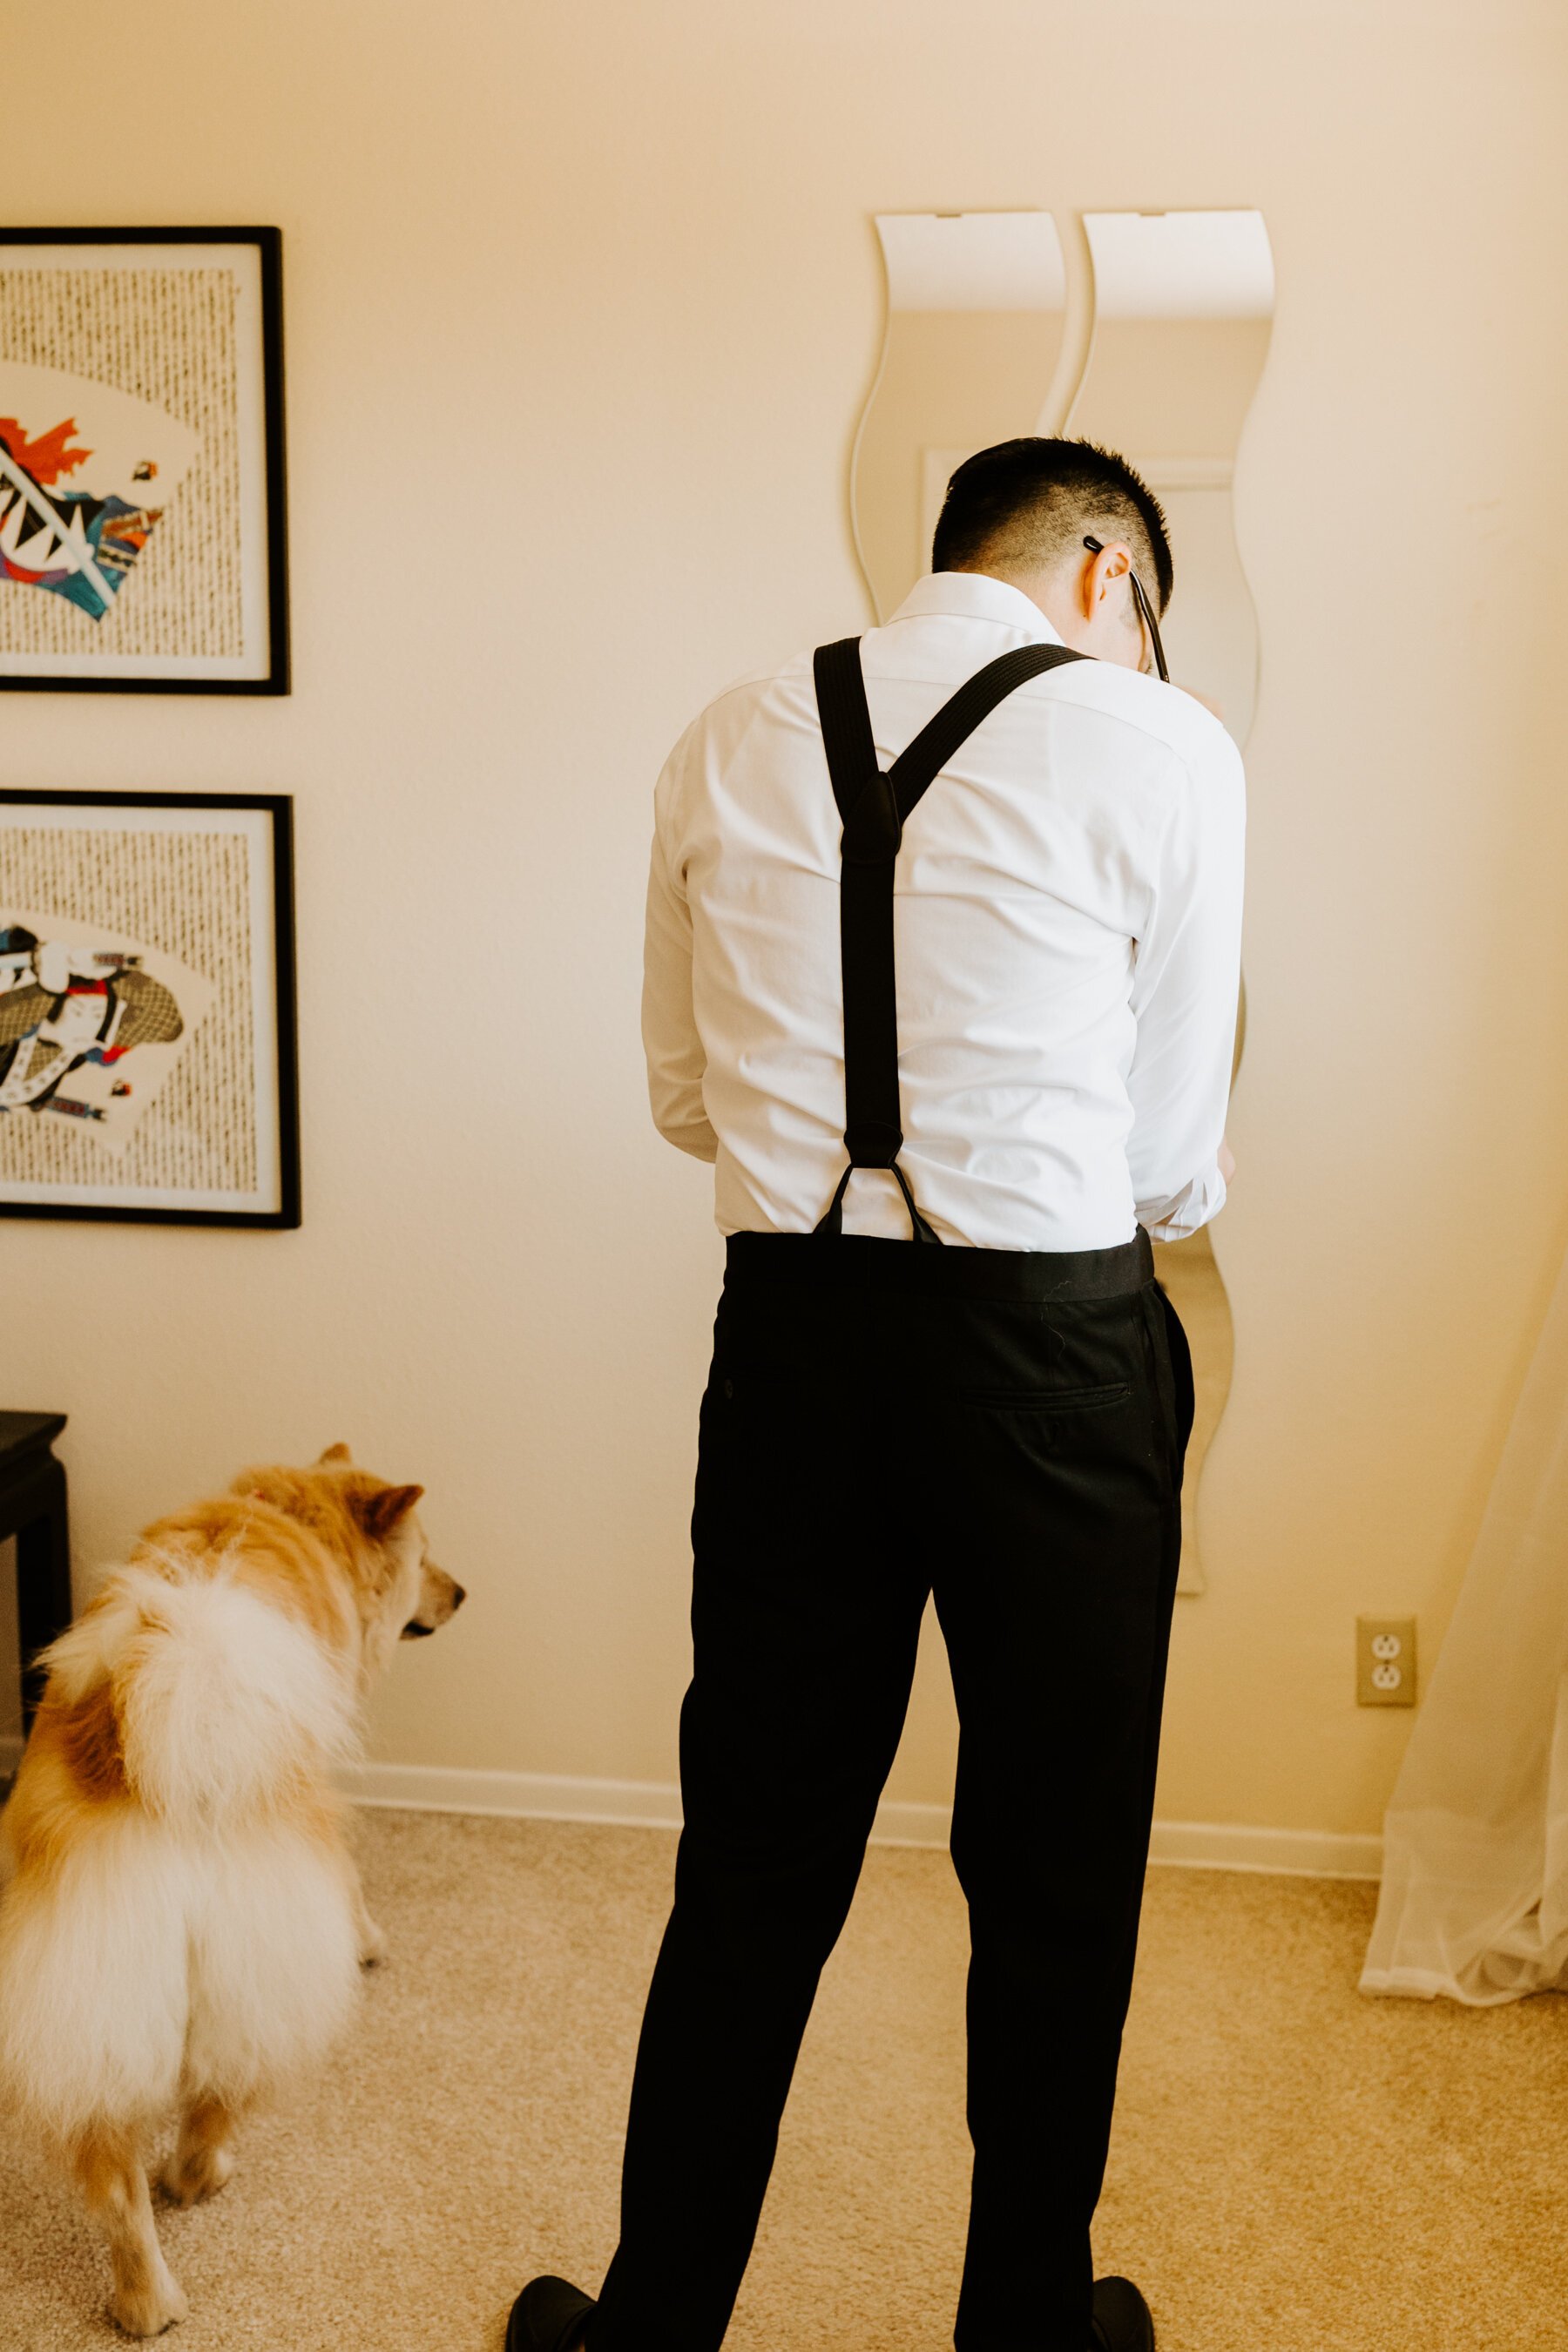 Wedding getting ready with dog | Photo by Tida Svy | www.tidasvy.com | Los Angeles Wedding Photographer